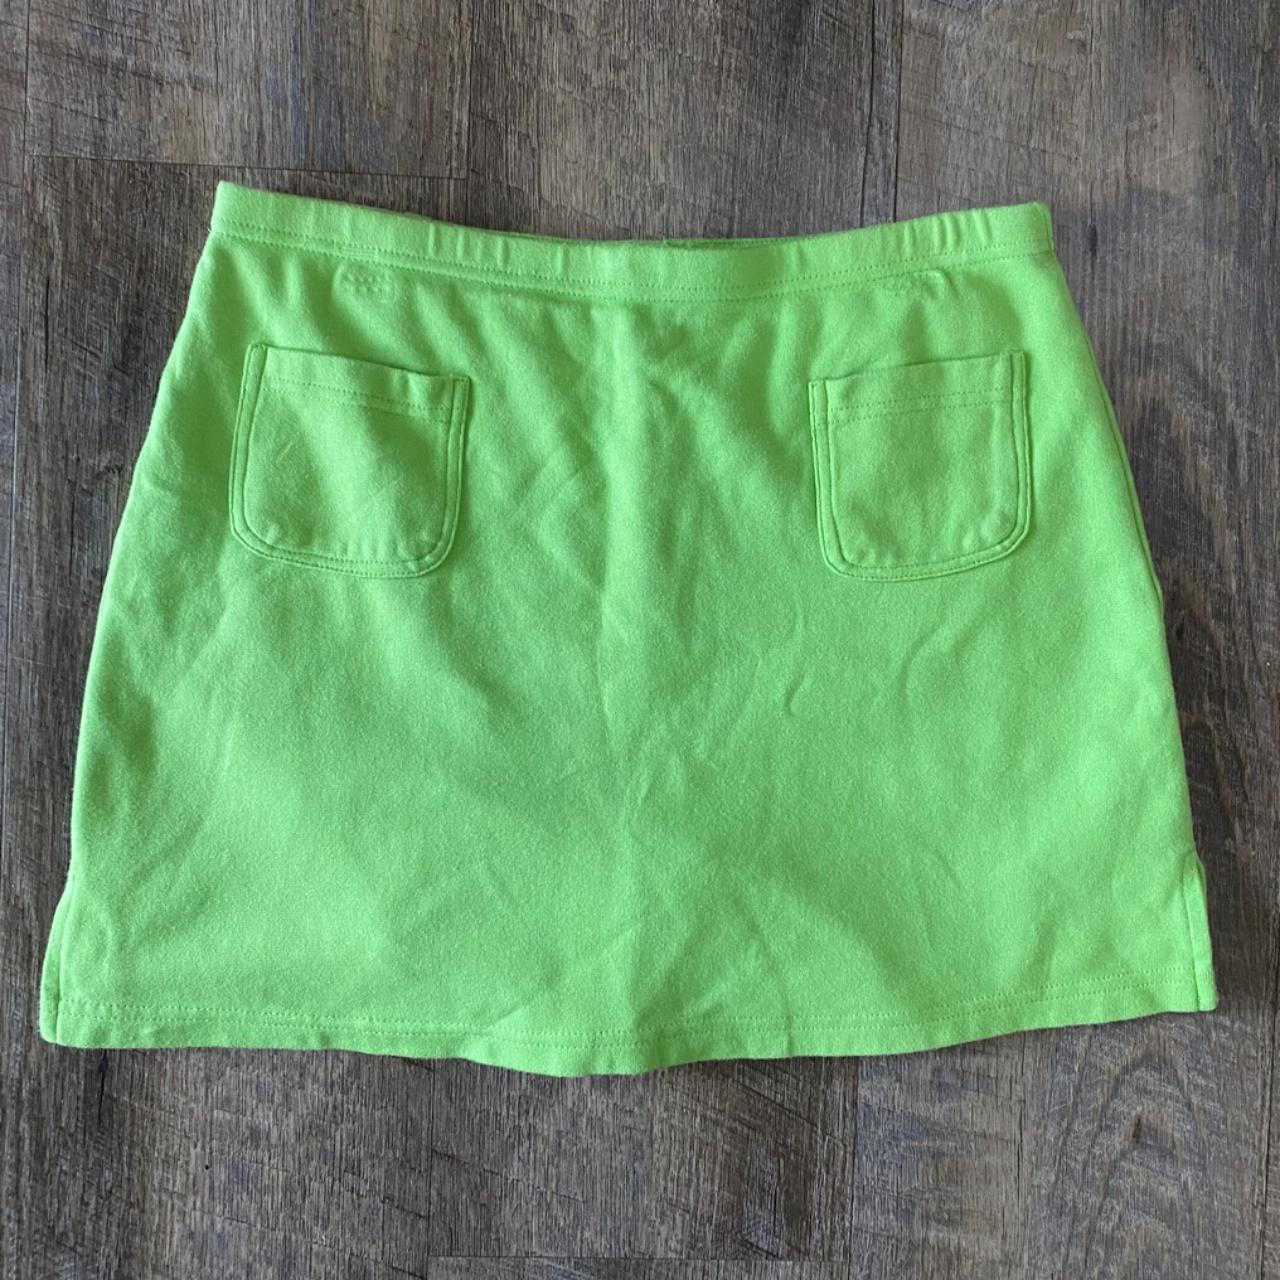 2000s Lime Green Mini Skirt Skort ♡cutest bright... - Depop